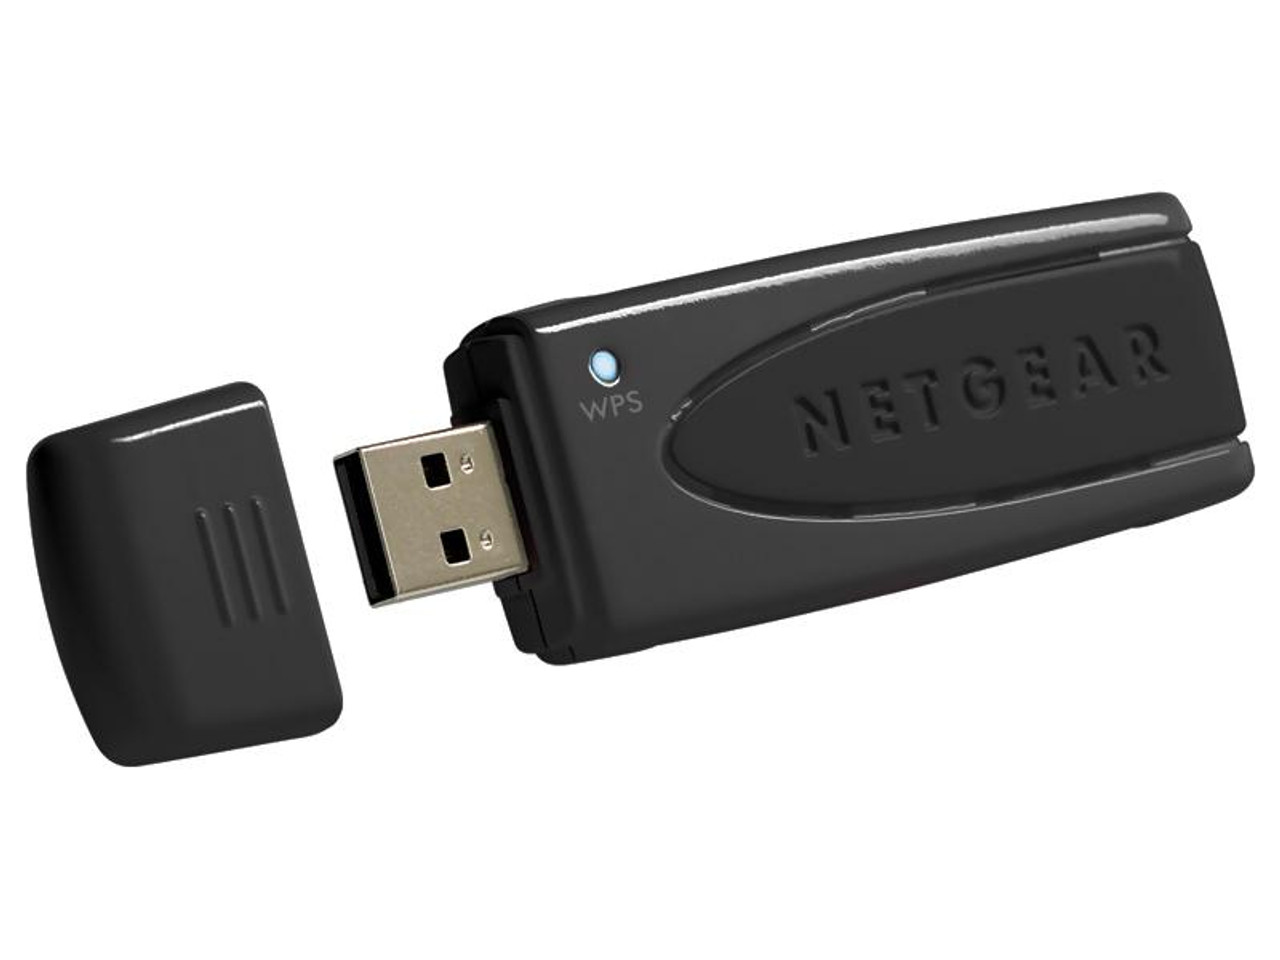 WNDA3100100GES NetGear N600 Wireless Dual Band USB Adapter (Refurbished)